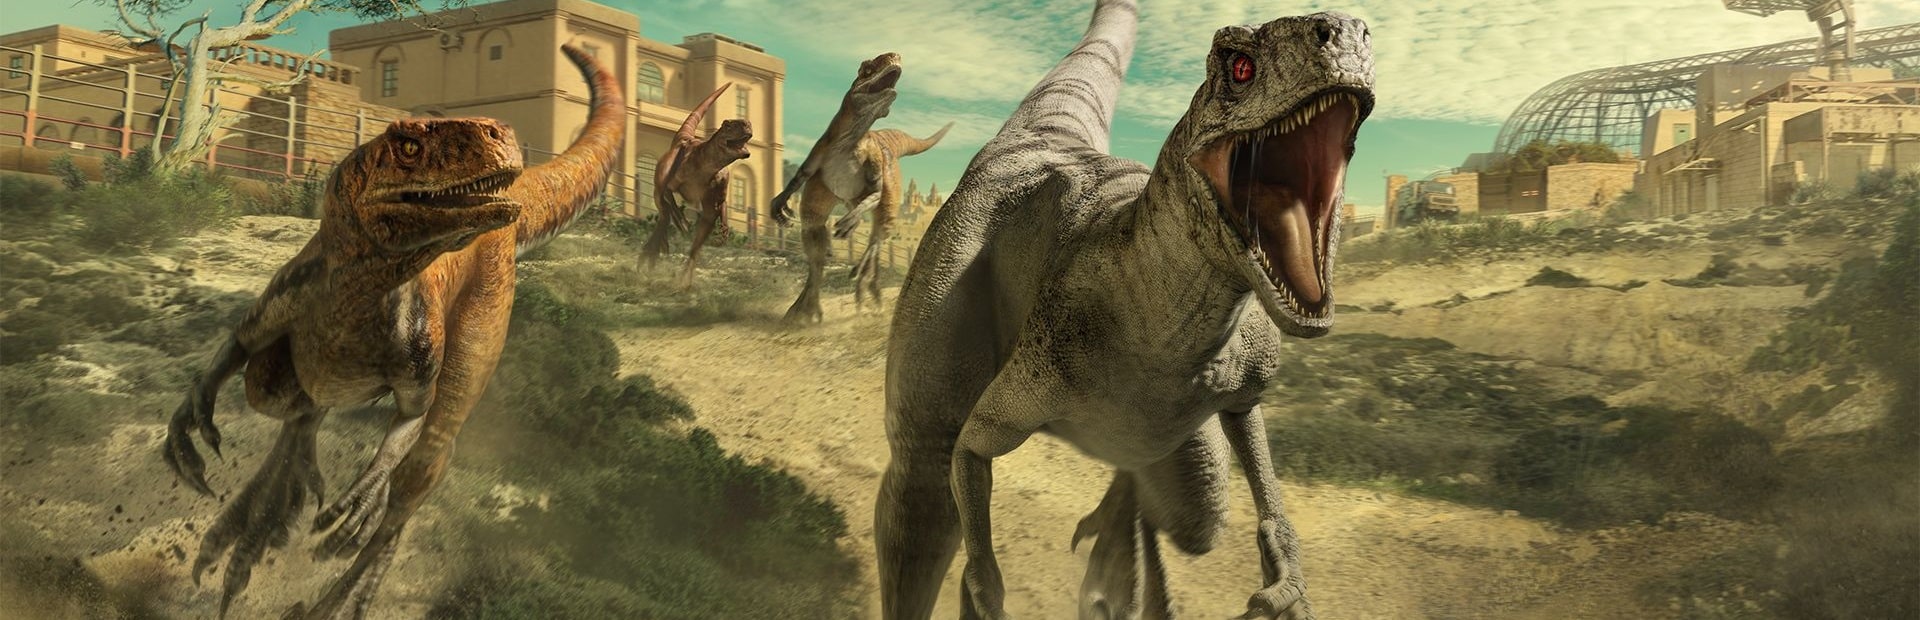 Jurassic World Evolution 2 Giveaway